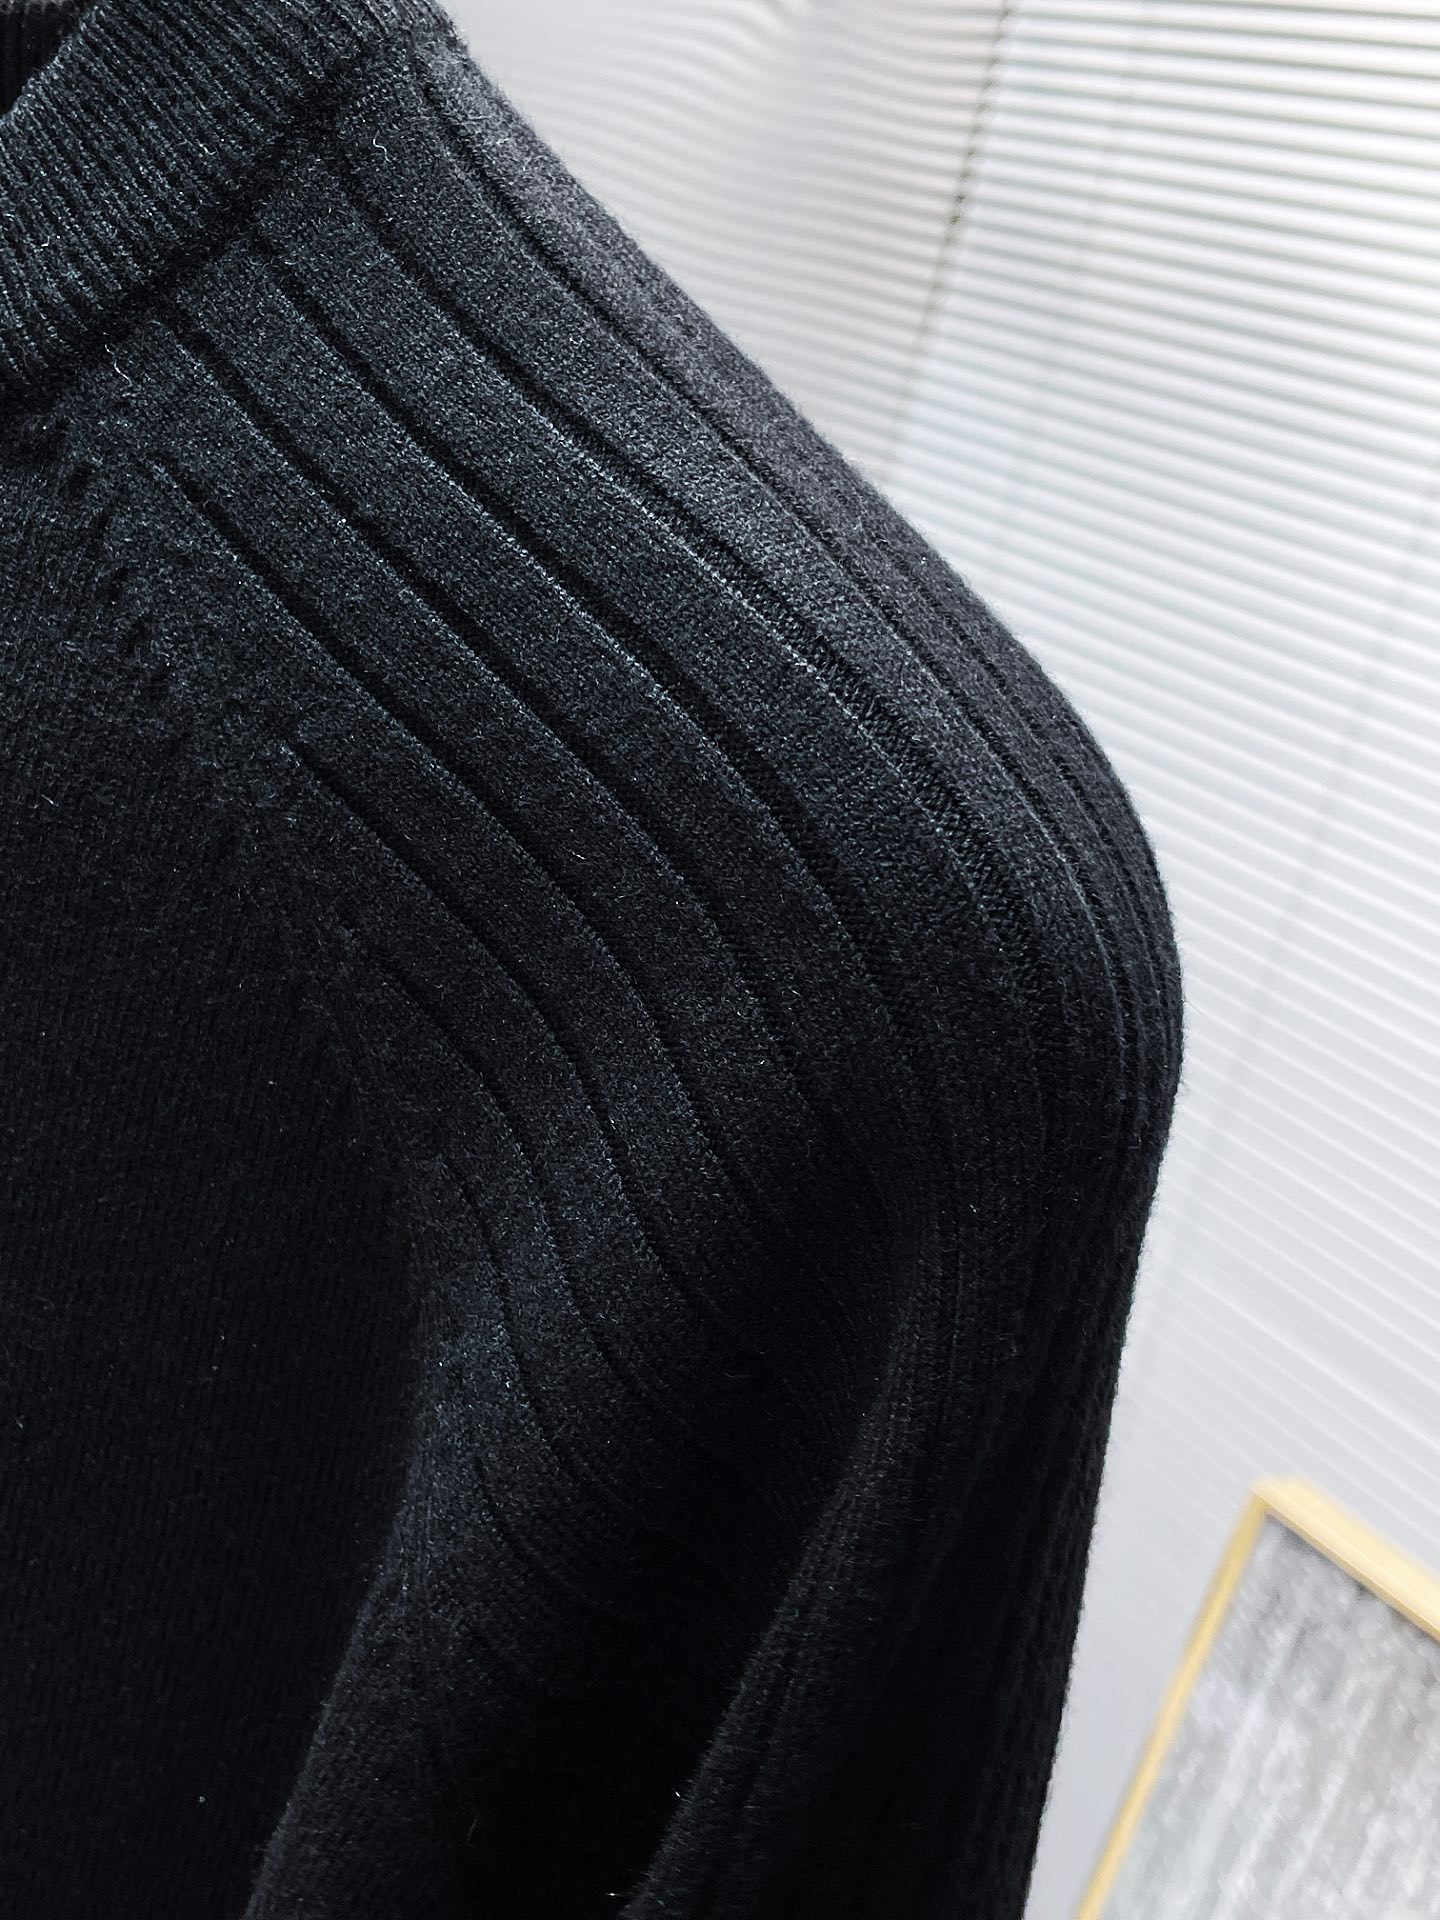 dior ディオールトップス偽物 ファッション 秋冬服 メンズ 新品 シンプル 高級品 ブラック_5